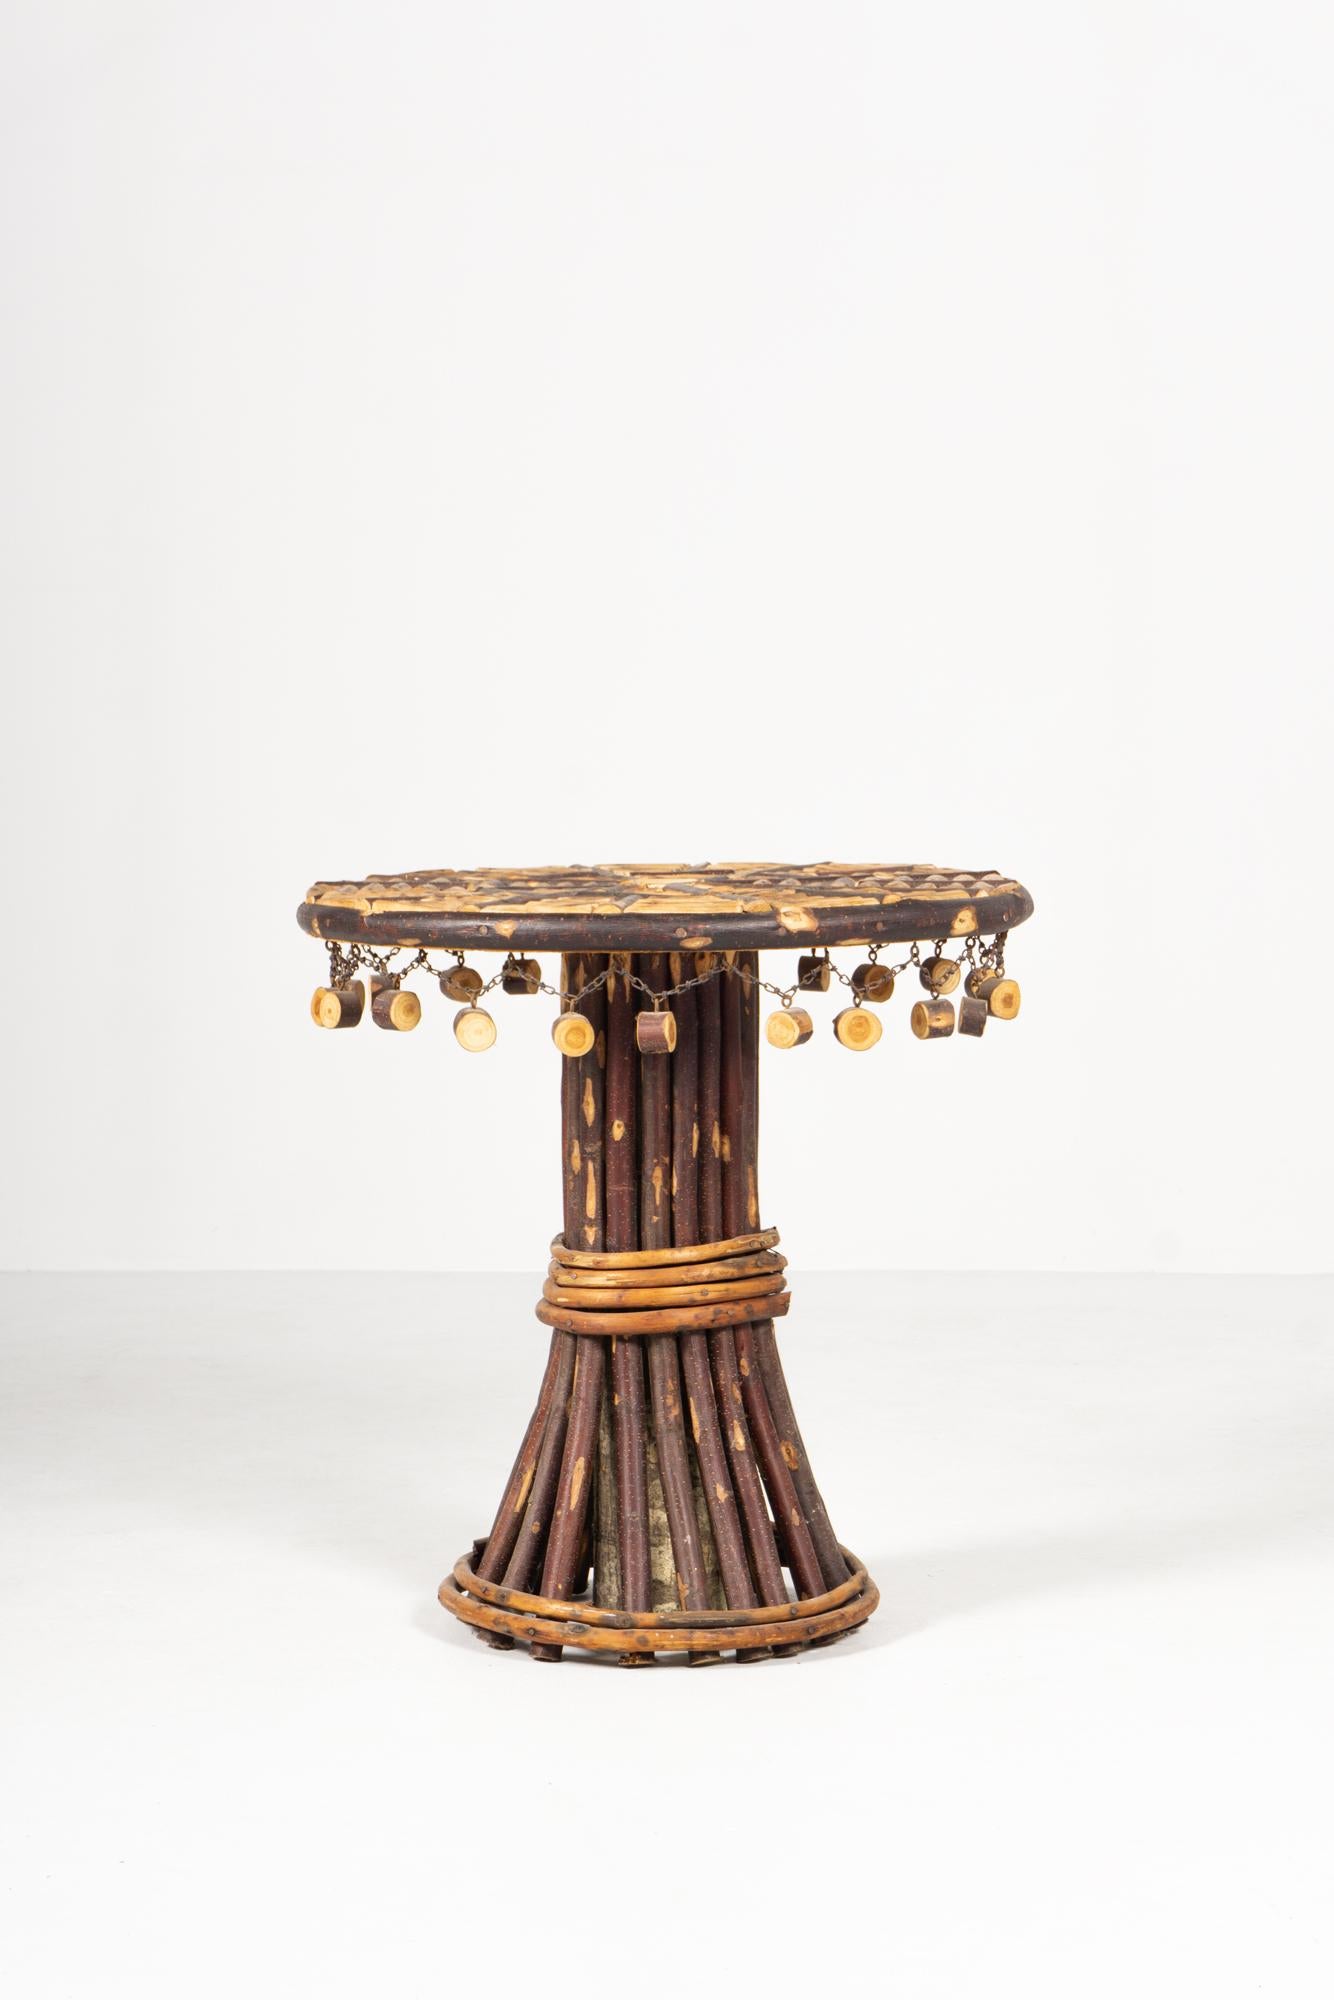 Side table, hickory (North American walnut), ash, hazelnut wood, steel
Design / Elizabeth Garouste + Mattia Bonetti 1992
ISBA Collection
Dimensions / H.58cm ø 59cm


+++
Designer Mattia Bonetti was born in Lugano, Switzerland, in 1952 and trained at